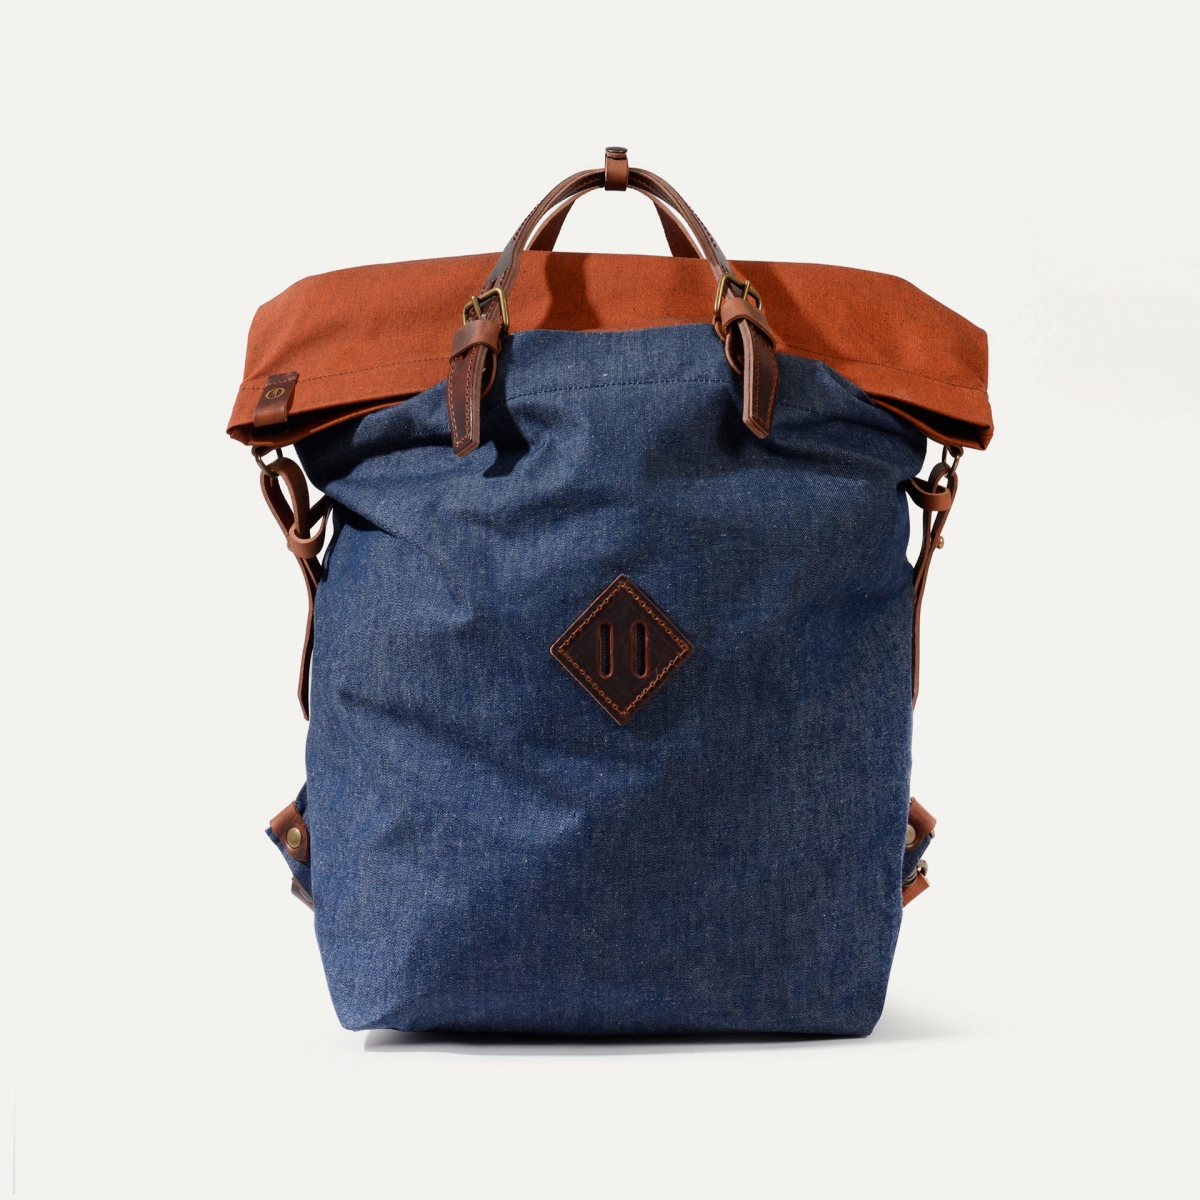 30L Woody backpack - Denim/Terra cotta (image n°2)